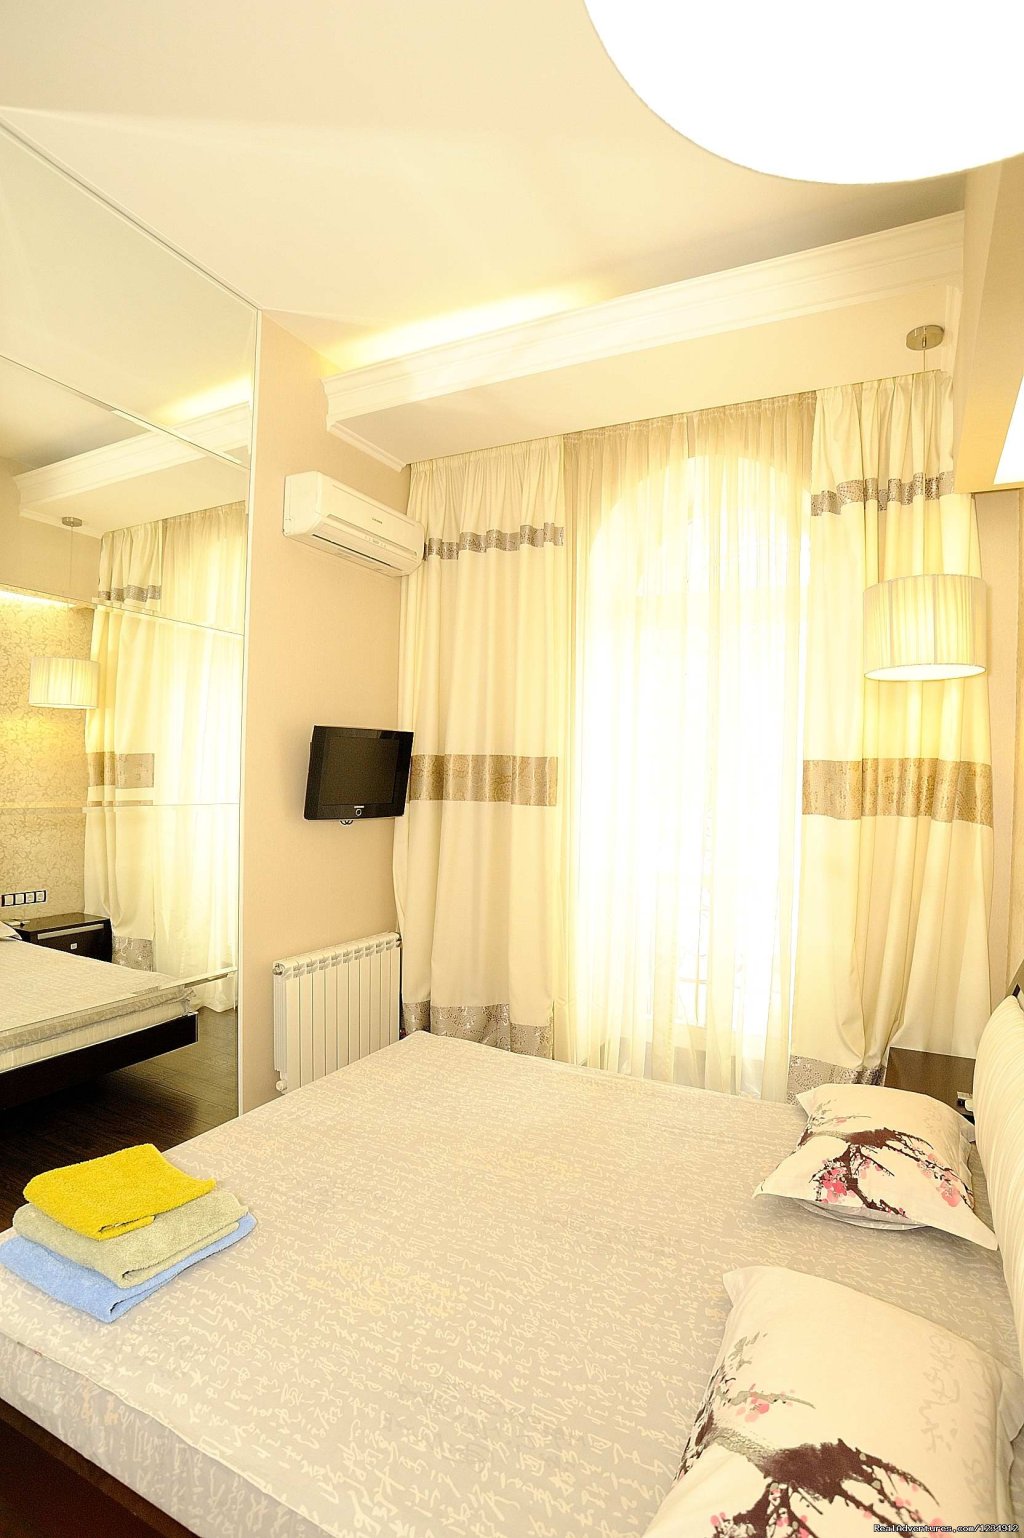 VIP 3room/2 bedroom apartment in the heart of Kiev | Kiev, Ukraine | Hotels & Resorts | Image #1/24 | 